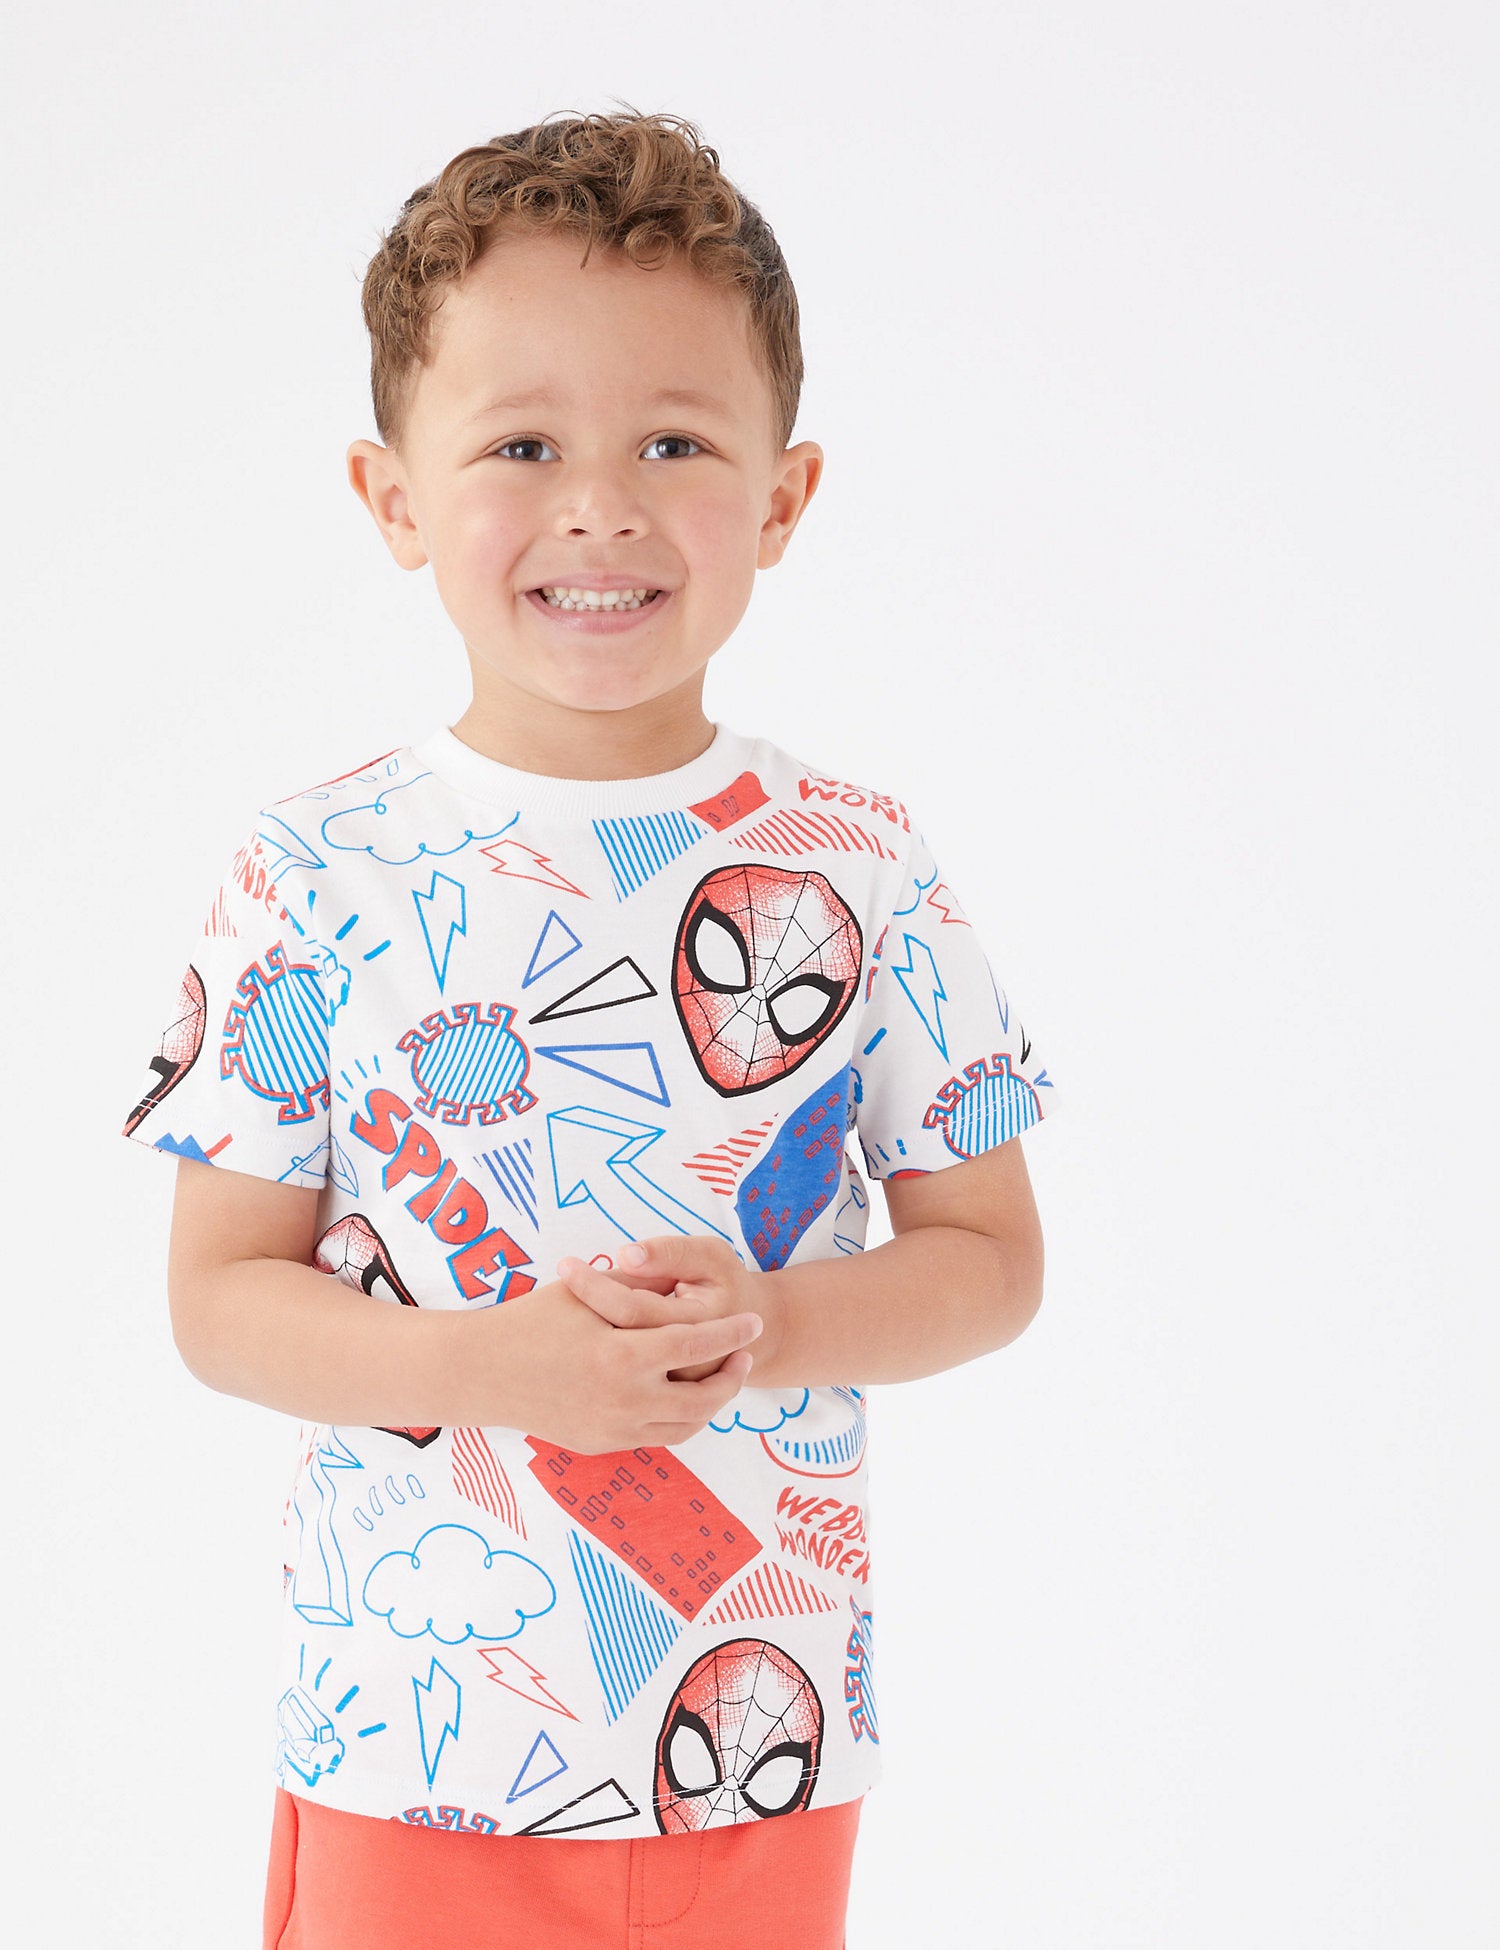 80s Spider Man Marvel Comics Superhero Underoos T-shirt Youth Small -   Canada